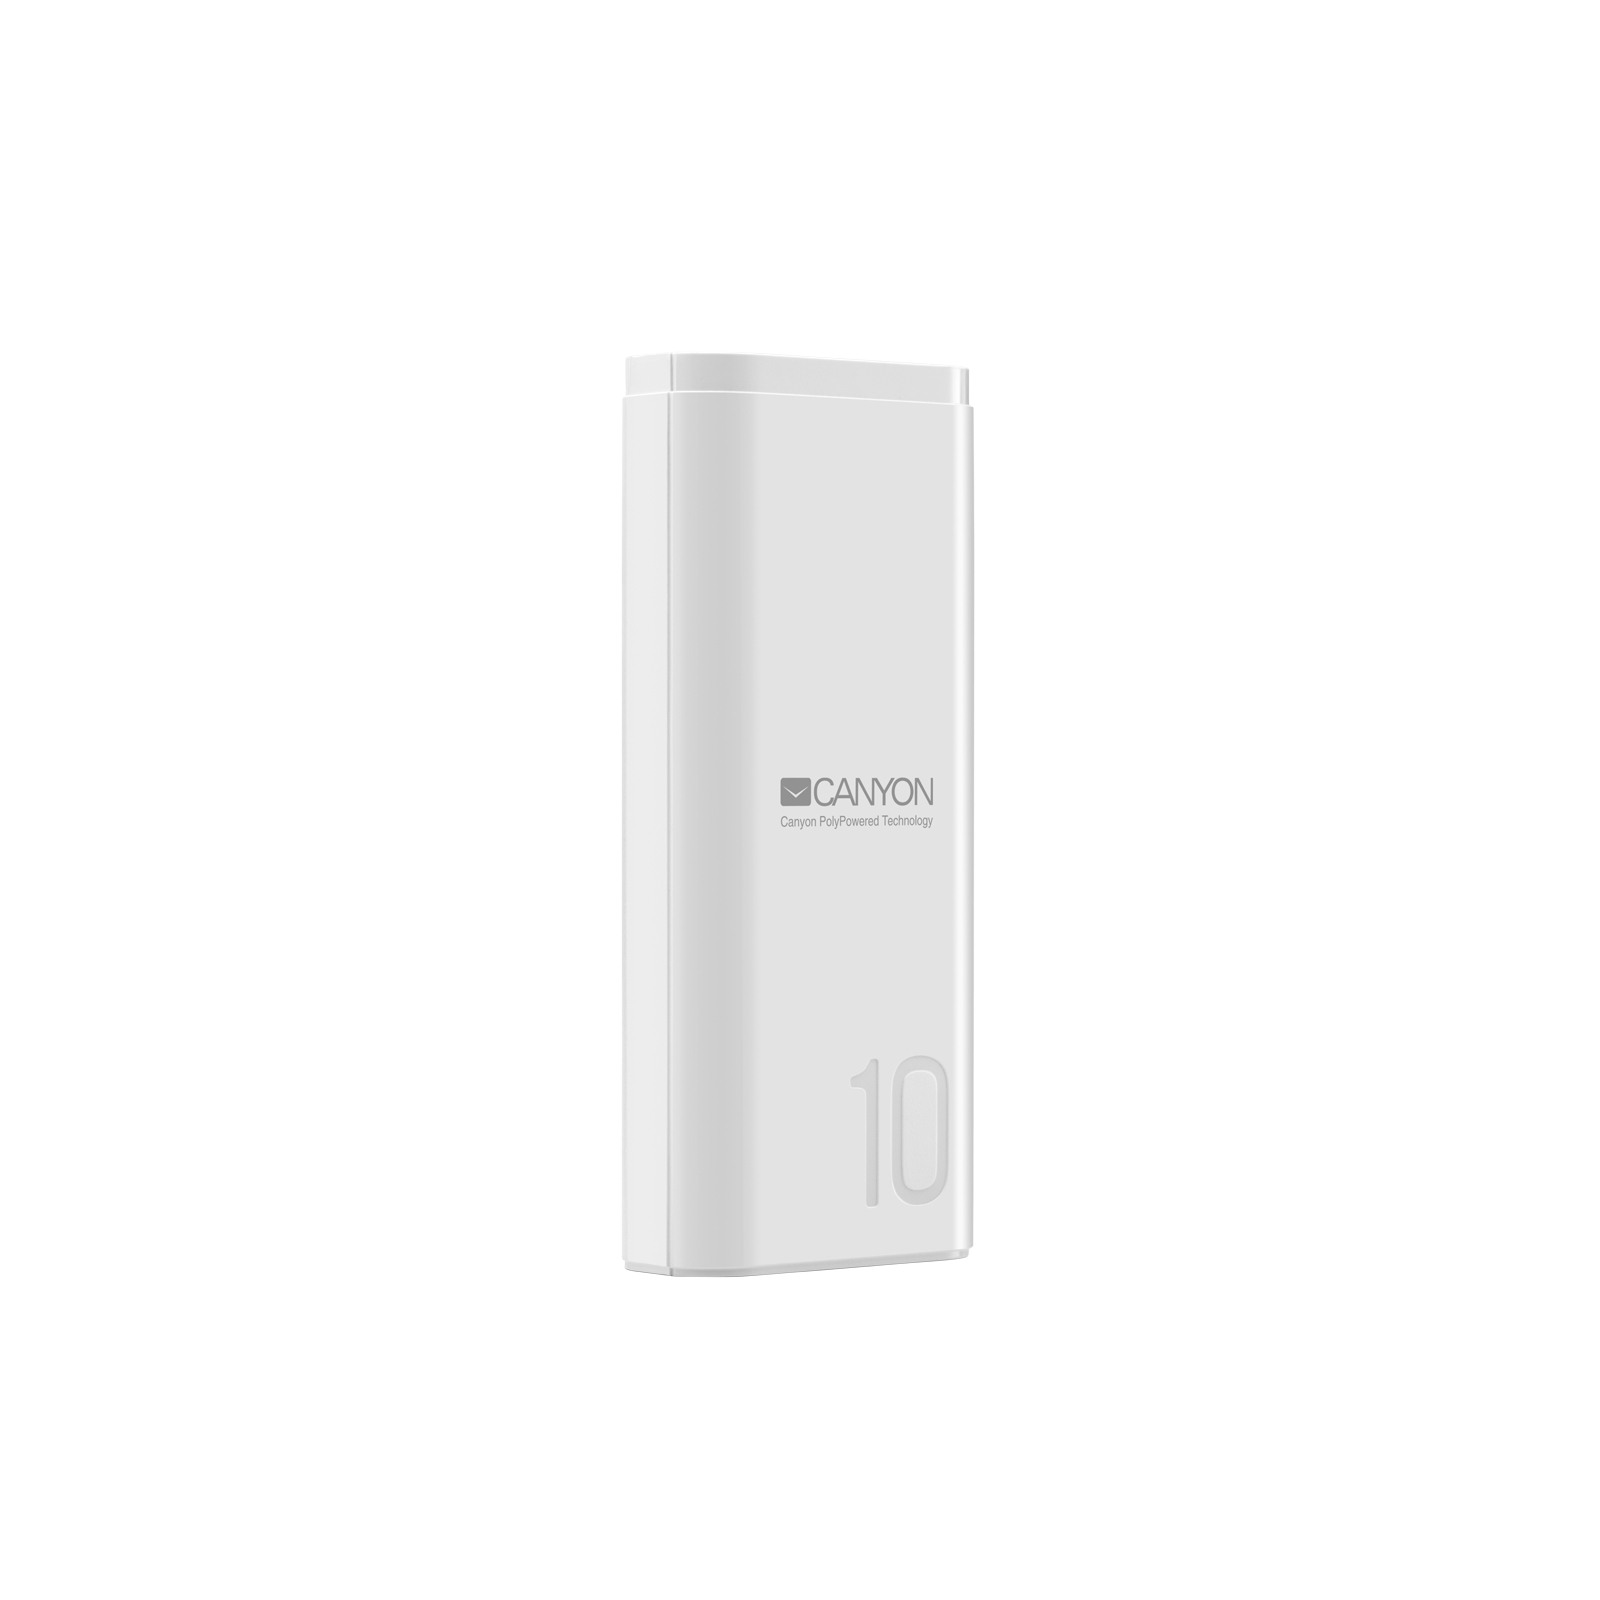 Батарея универсальная Canyon PB-103 10000mAh, Input 5V/2A, Output 5V/2.1A, White (CNE-CPB010W)